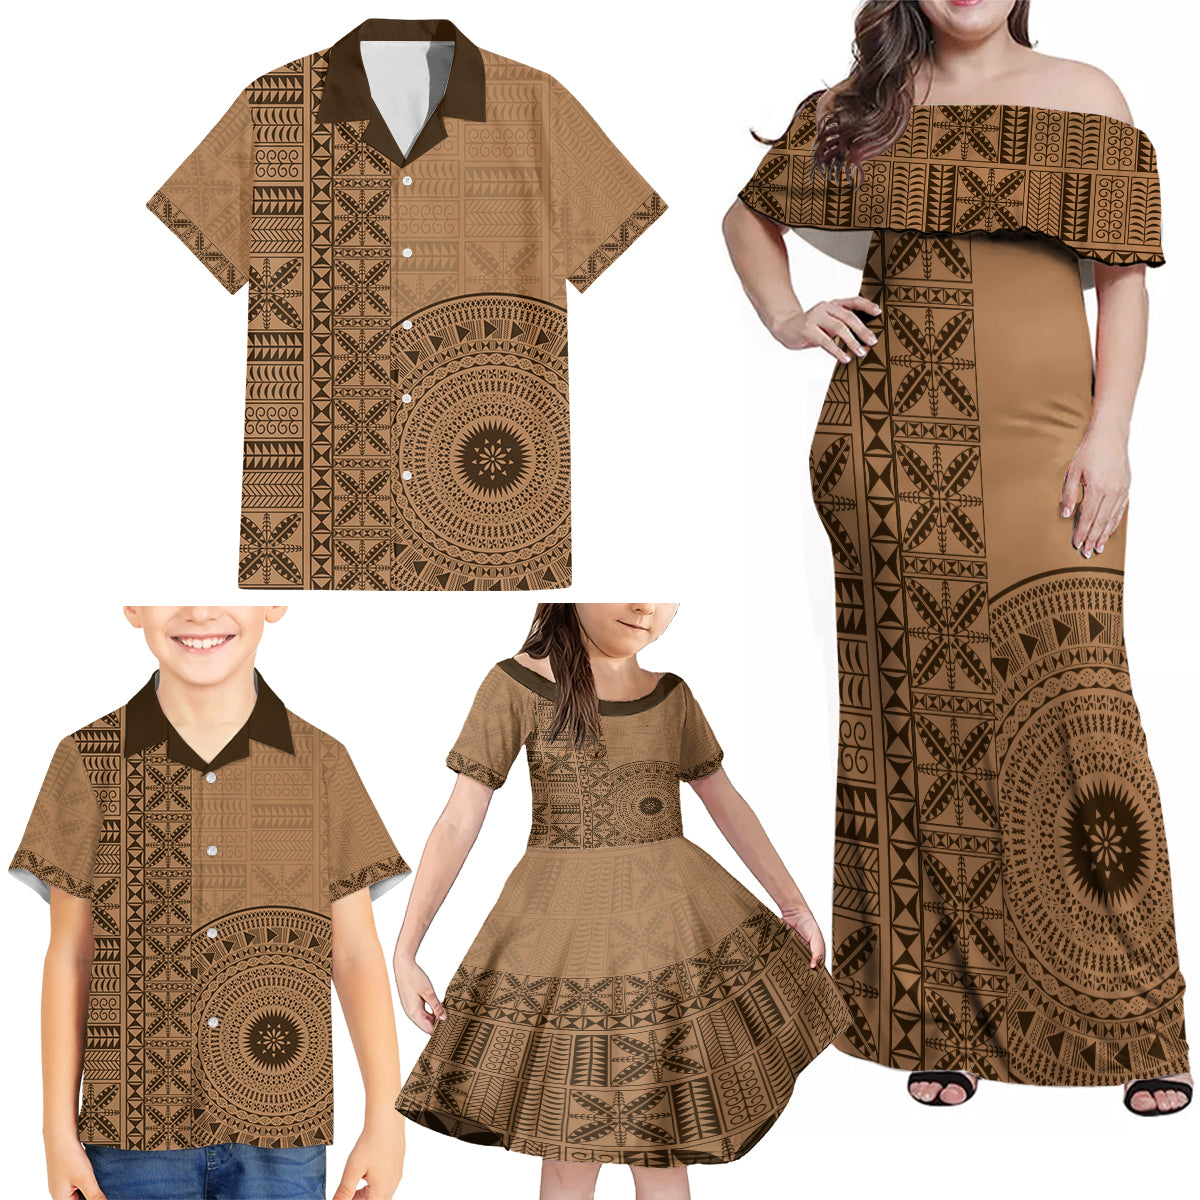 Fakaalofa Lahi Atu Niue Family Matching Off Shoulder Maxi Dress and Hawaiian Shirt Vintage Hiapo Pattern Brown Version LT14 - Polynesian Pride